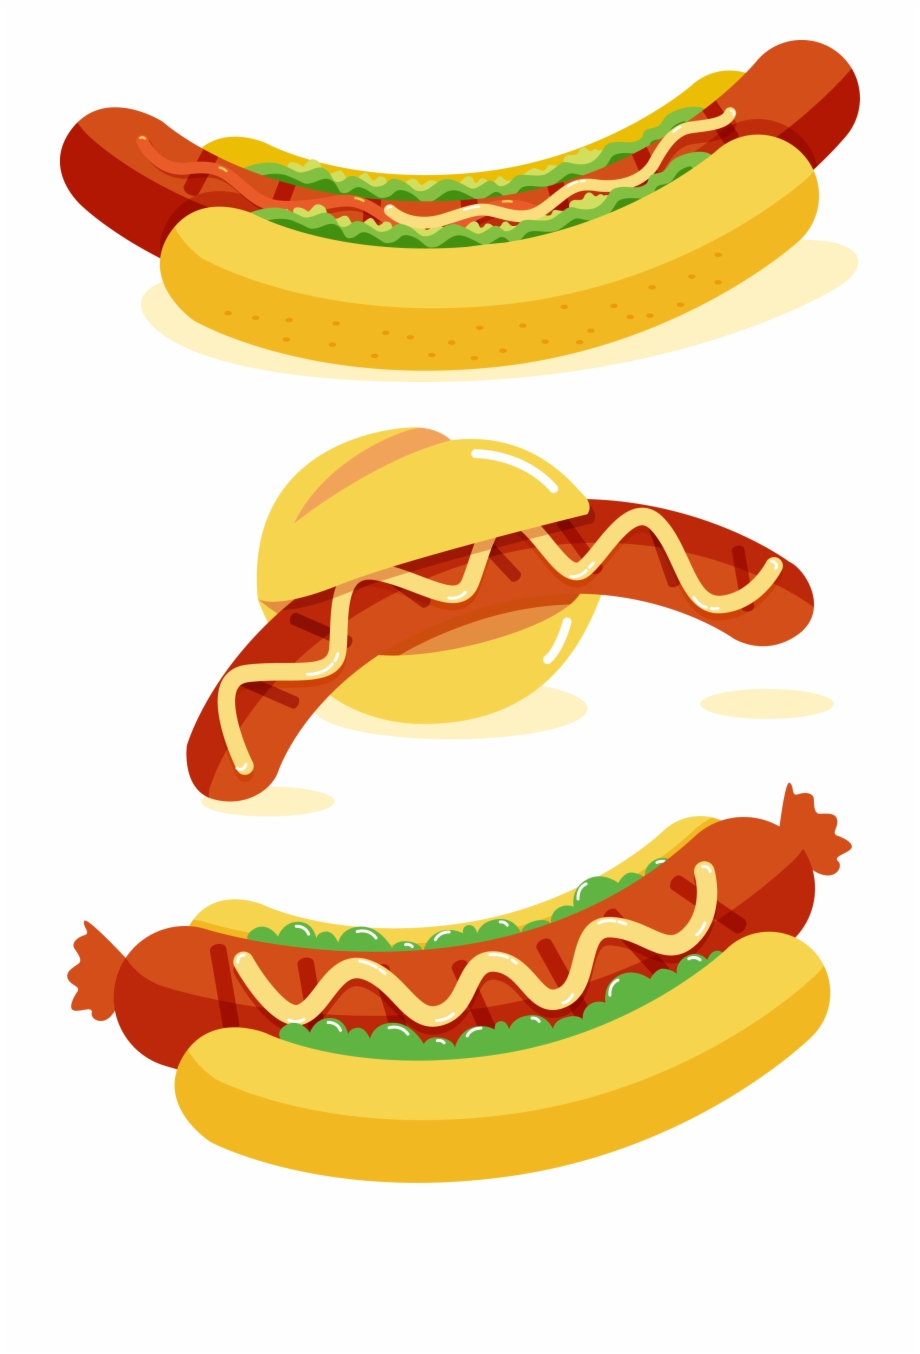 Hot Dog Bratwurst Sausage Fast Food Fast Food